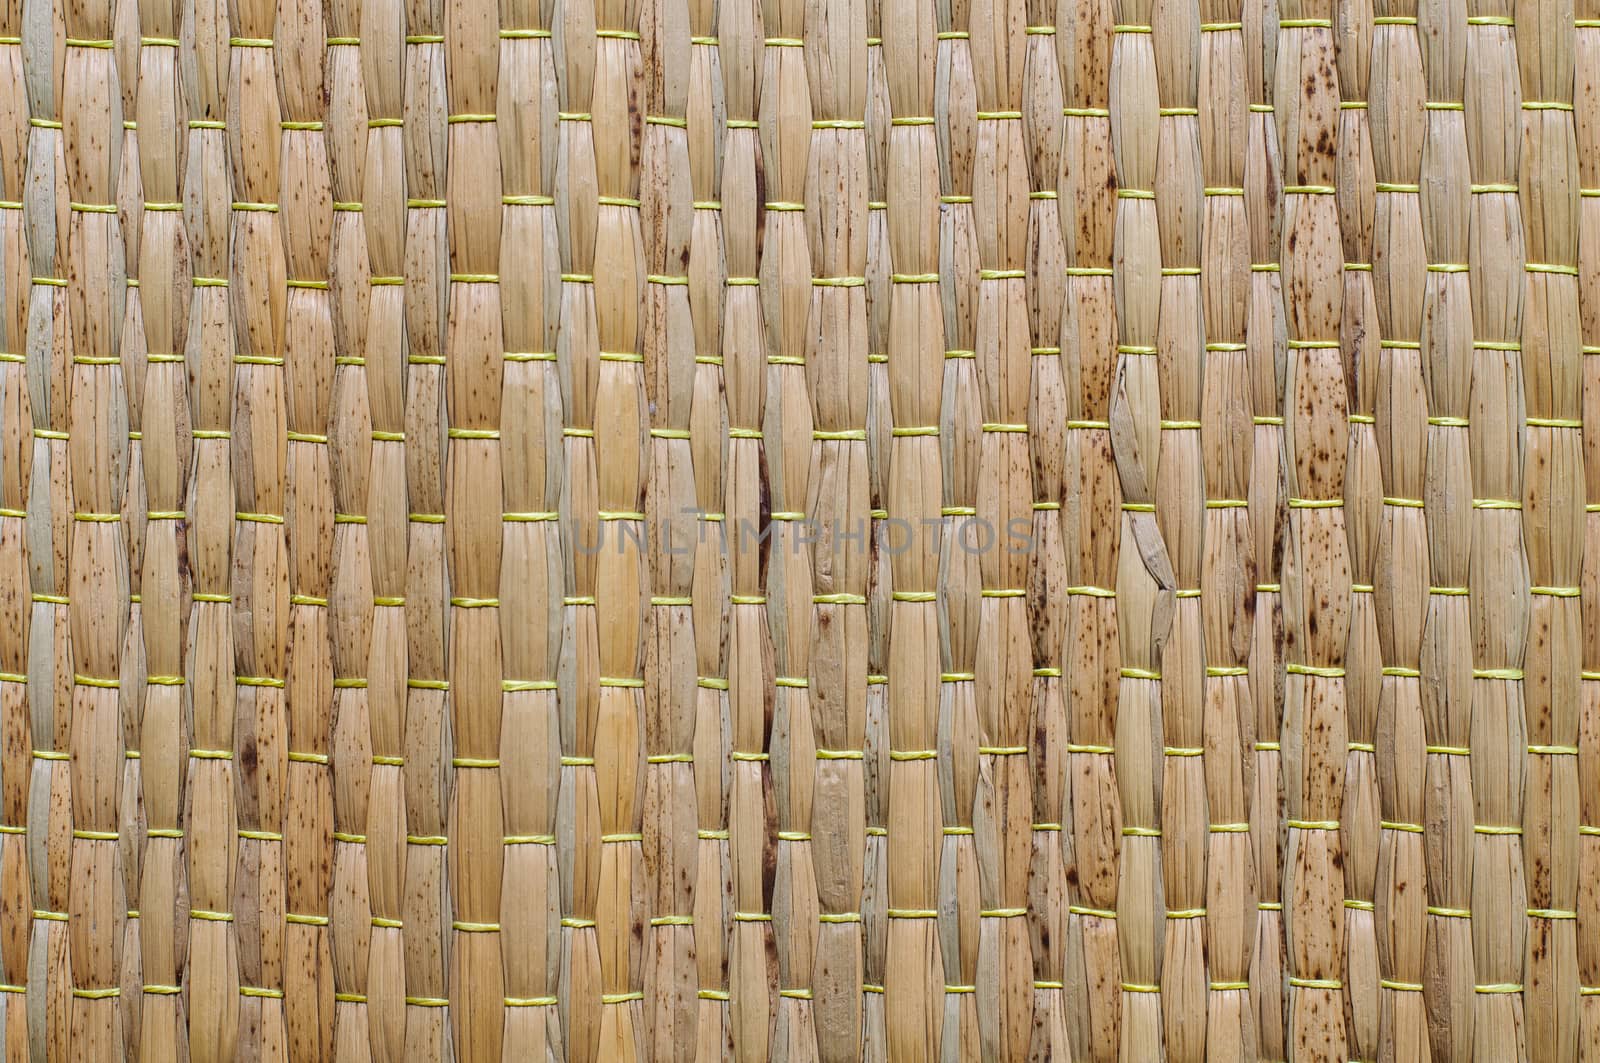 bamboo mat background by Sorapop